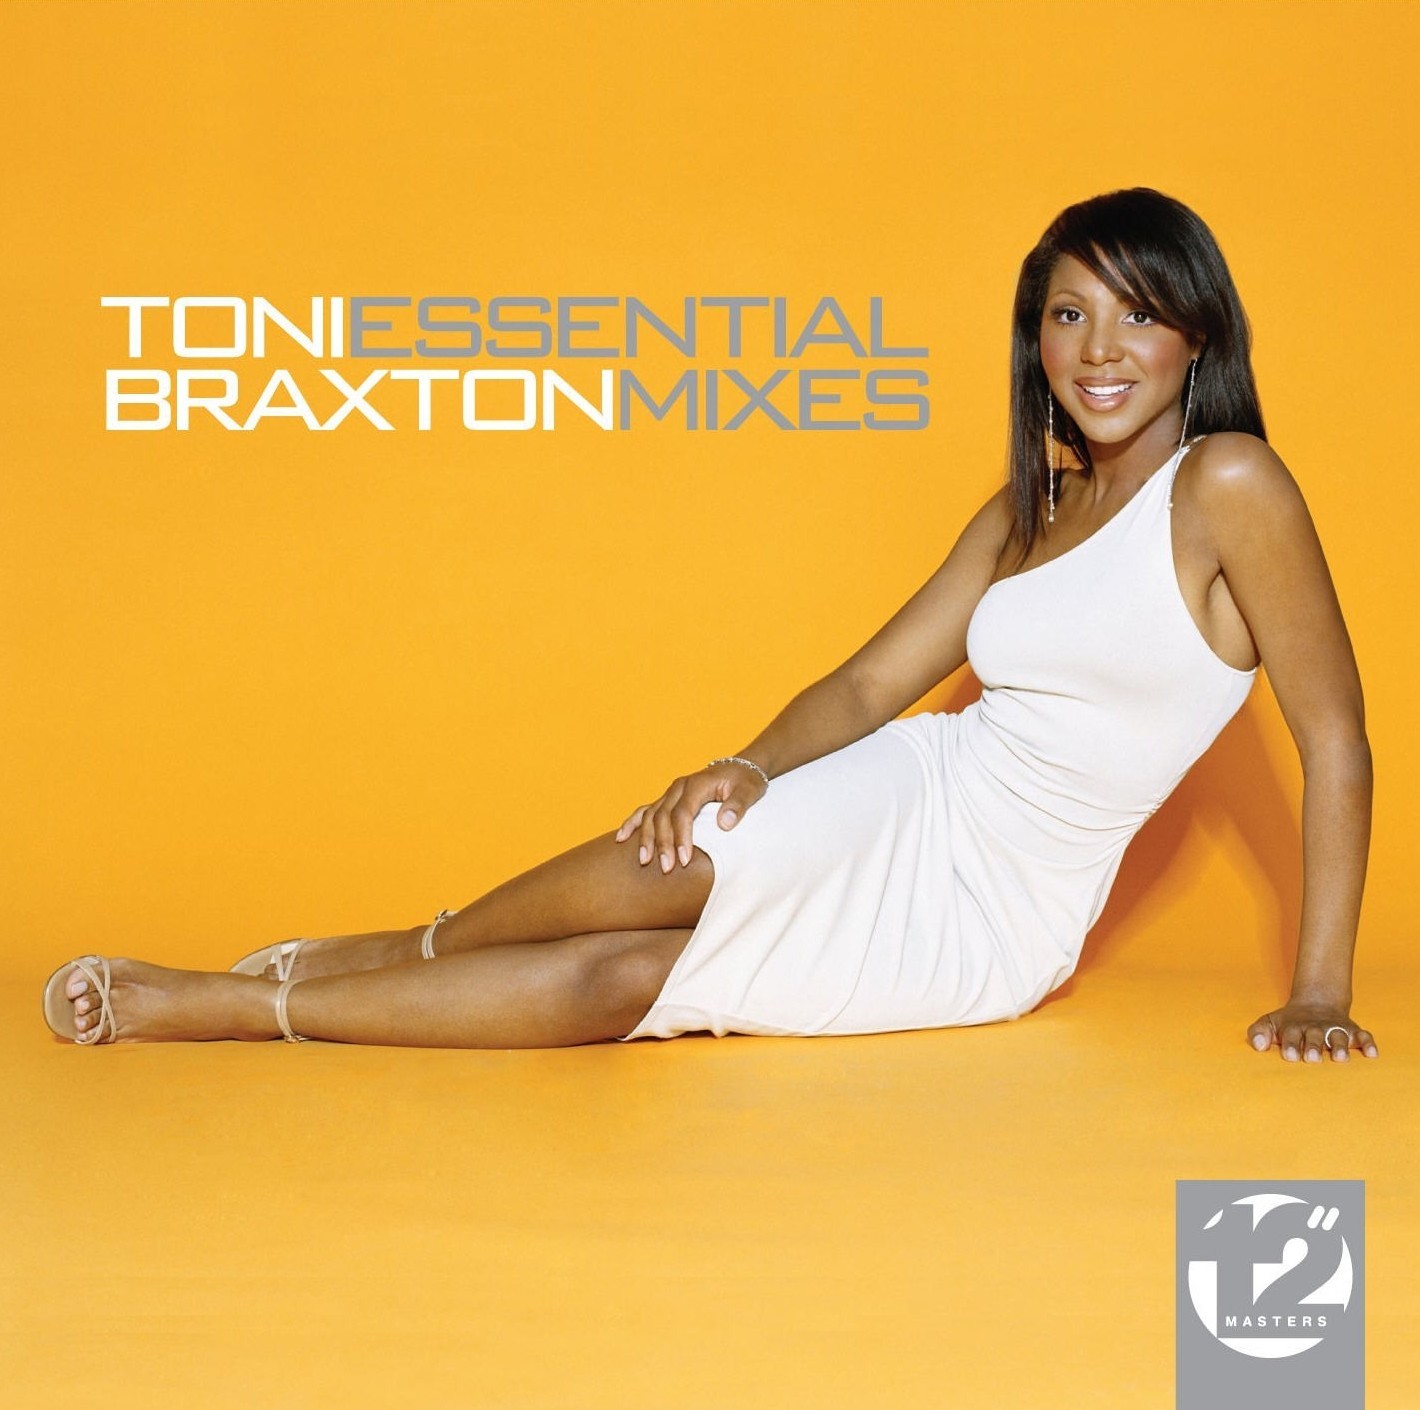 http://2.bp.blogspot.com/_mupIVJbjvuU/TKqzLlX0WzI/AAAAAAAAHhE/3y7FHZeod9Y/s1600/Toni+Braxton+-+Essential+Mixes+(Official+Album+Cover).jpg